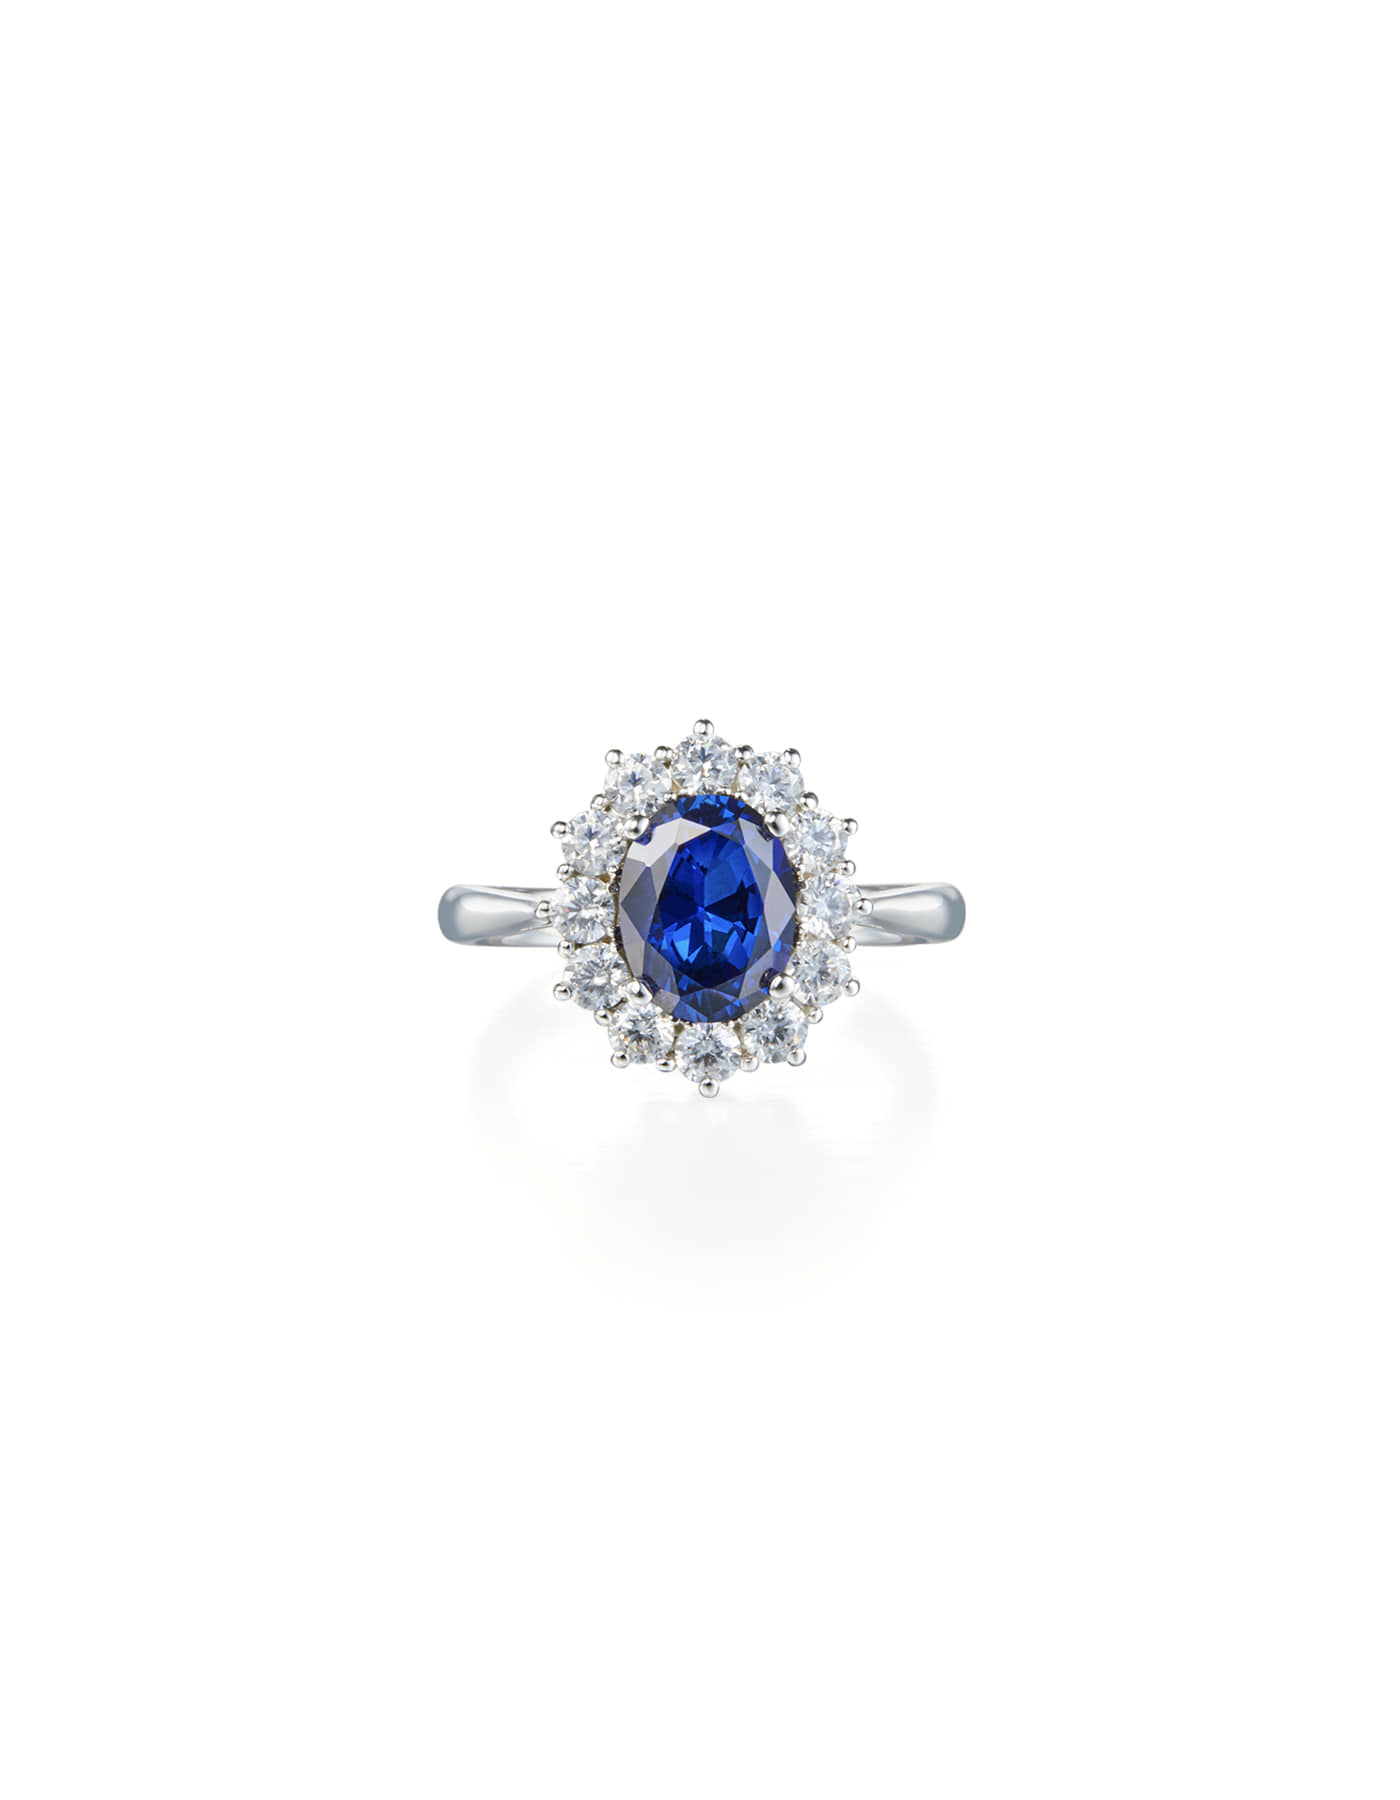 2ct Blue Sapphire Ring